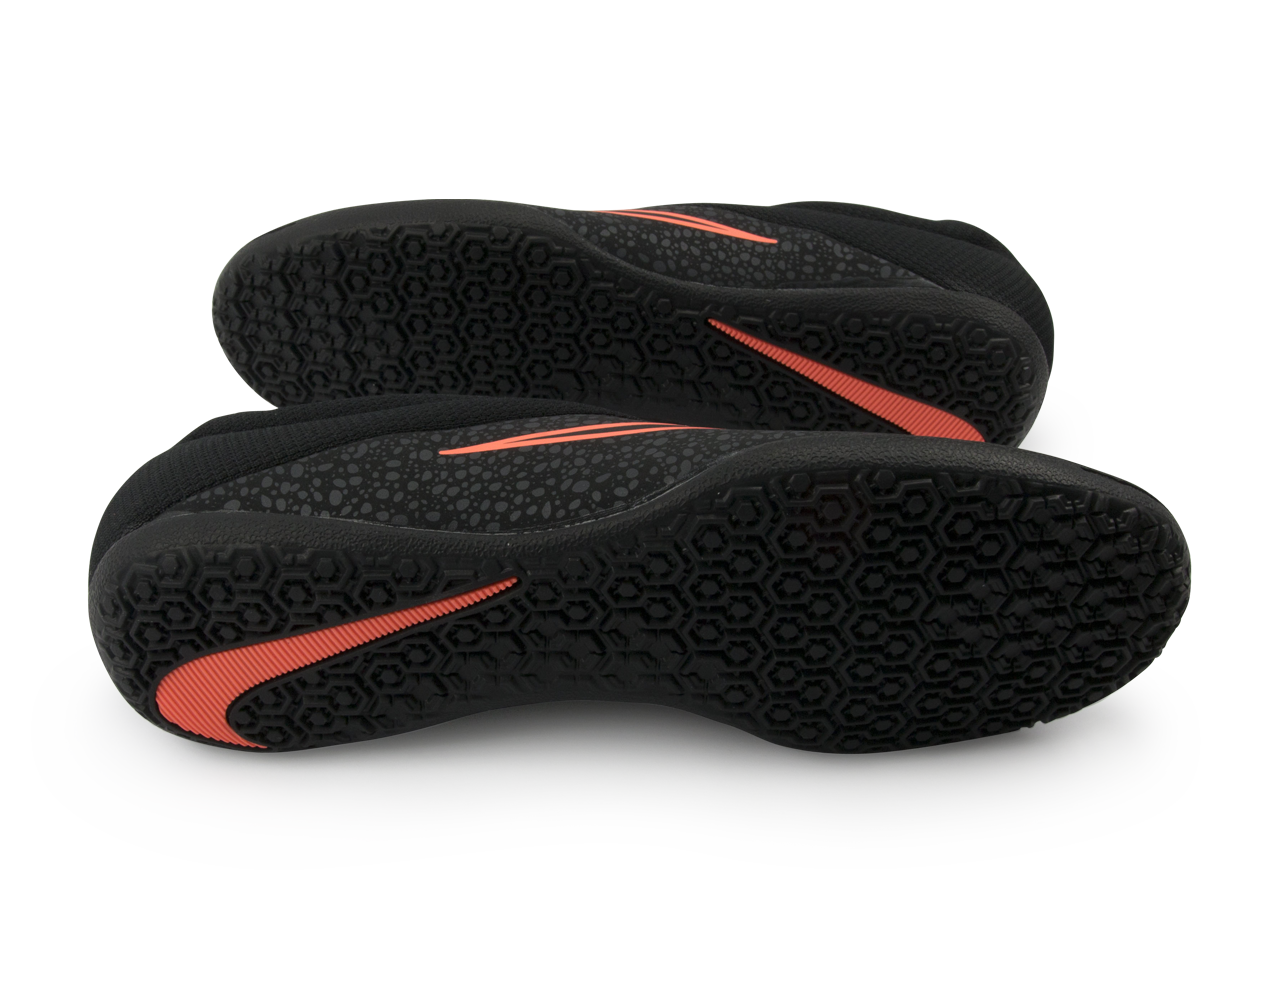 Nike Men's MercurialX Pro Indoor Soccer Shoes Black/Black/Anthracite